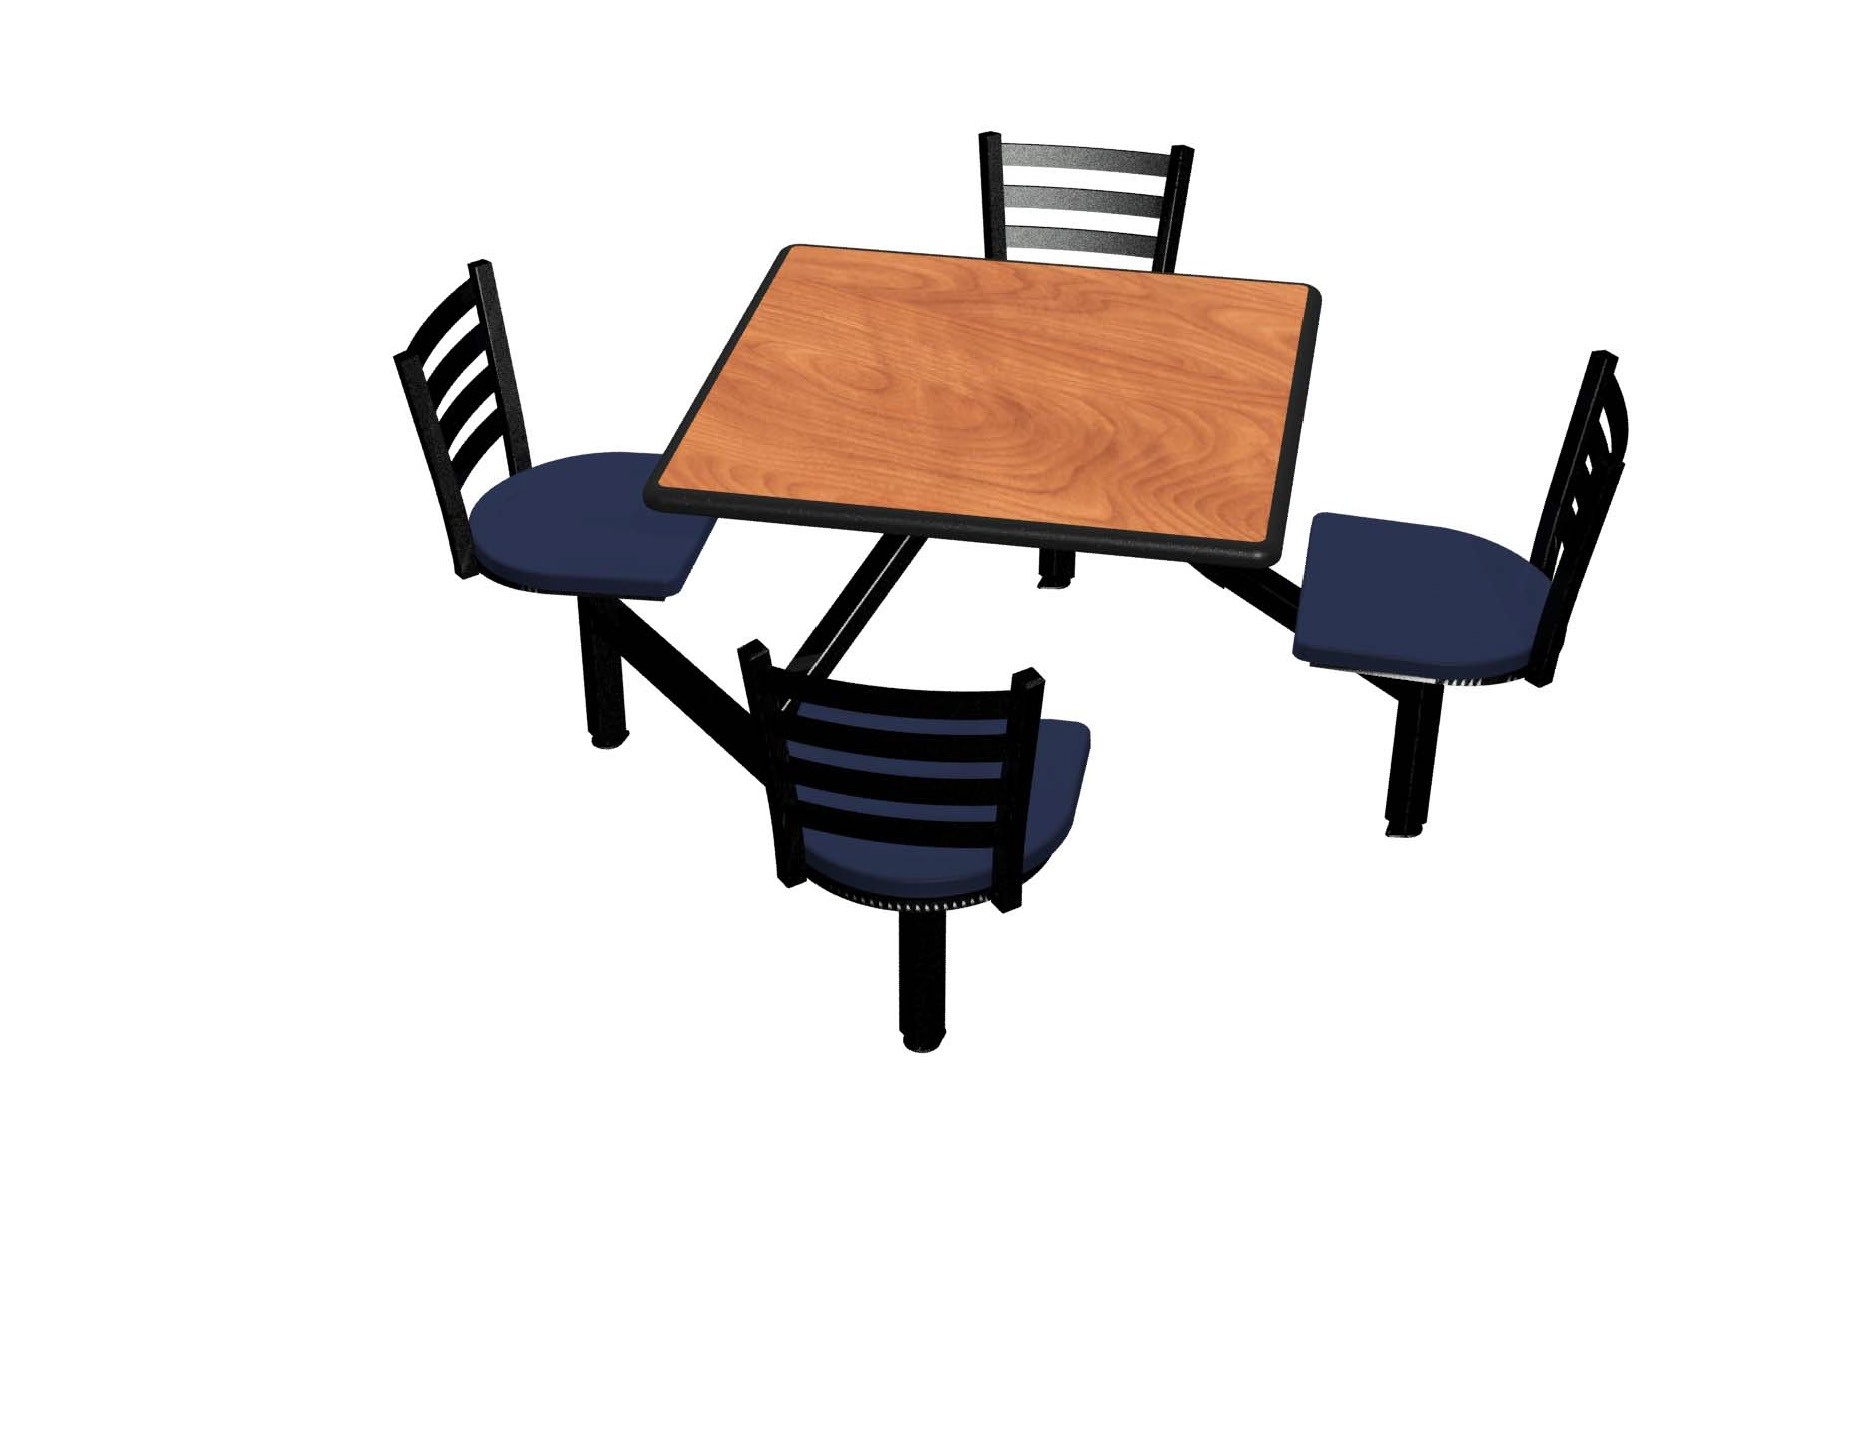 Wild Cherry laminate table top, Black Dur-A-Edge®, Encore chairhead with Atlantis seat